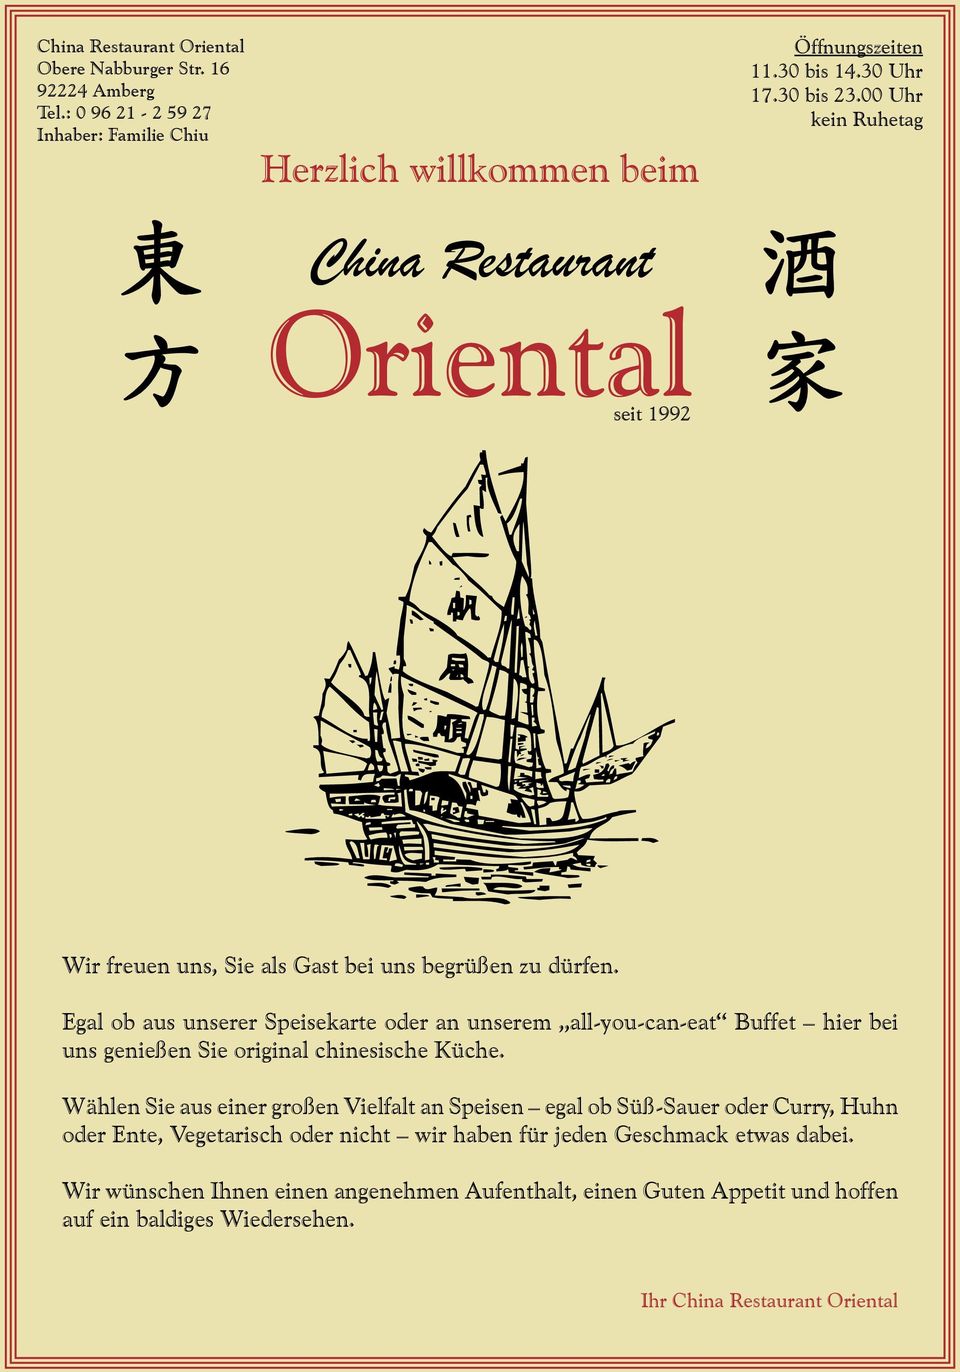 Egal ob aus unserer Speisekarte oder an unserem all-you-can-eat Buffet hier bei uns genießen Sie original chinesische Küche.